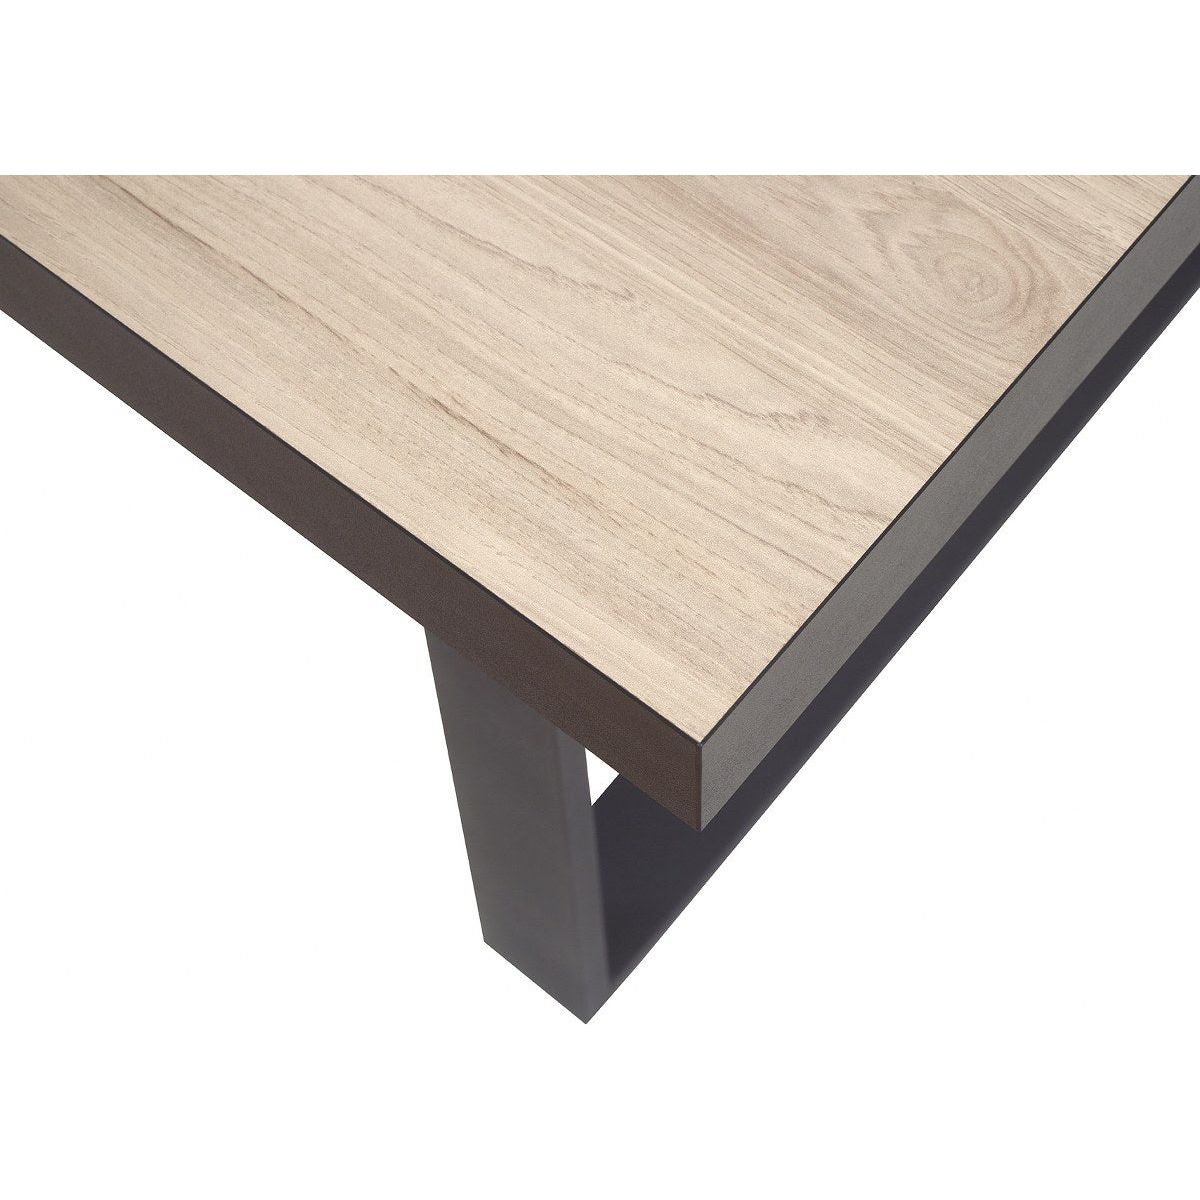 Table | Furniture series Dylan | natural, black